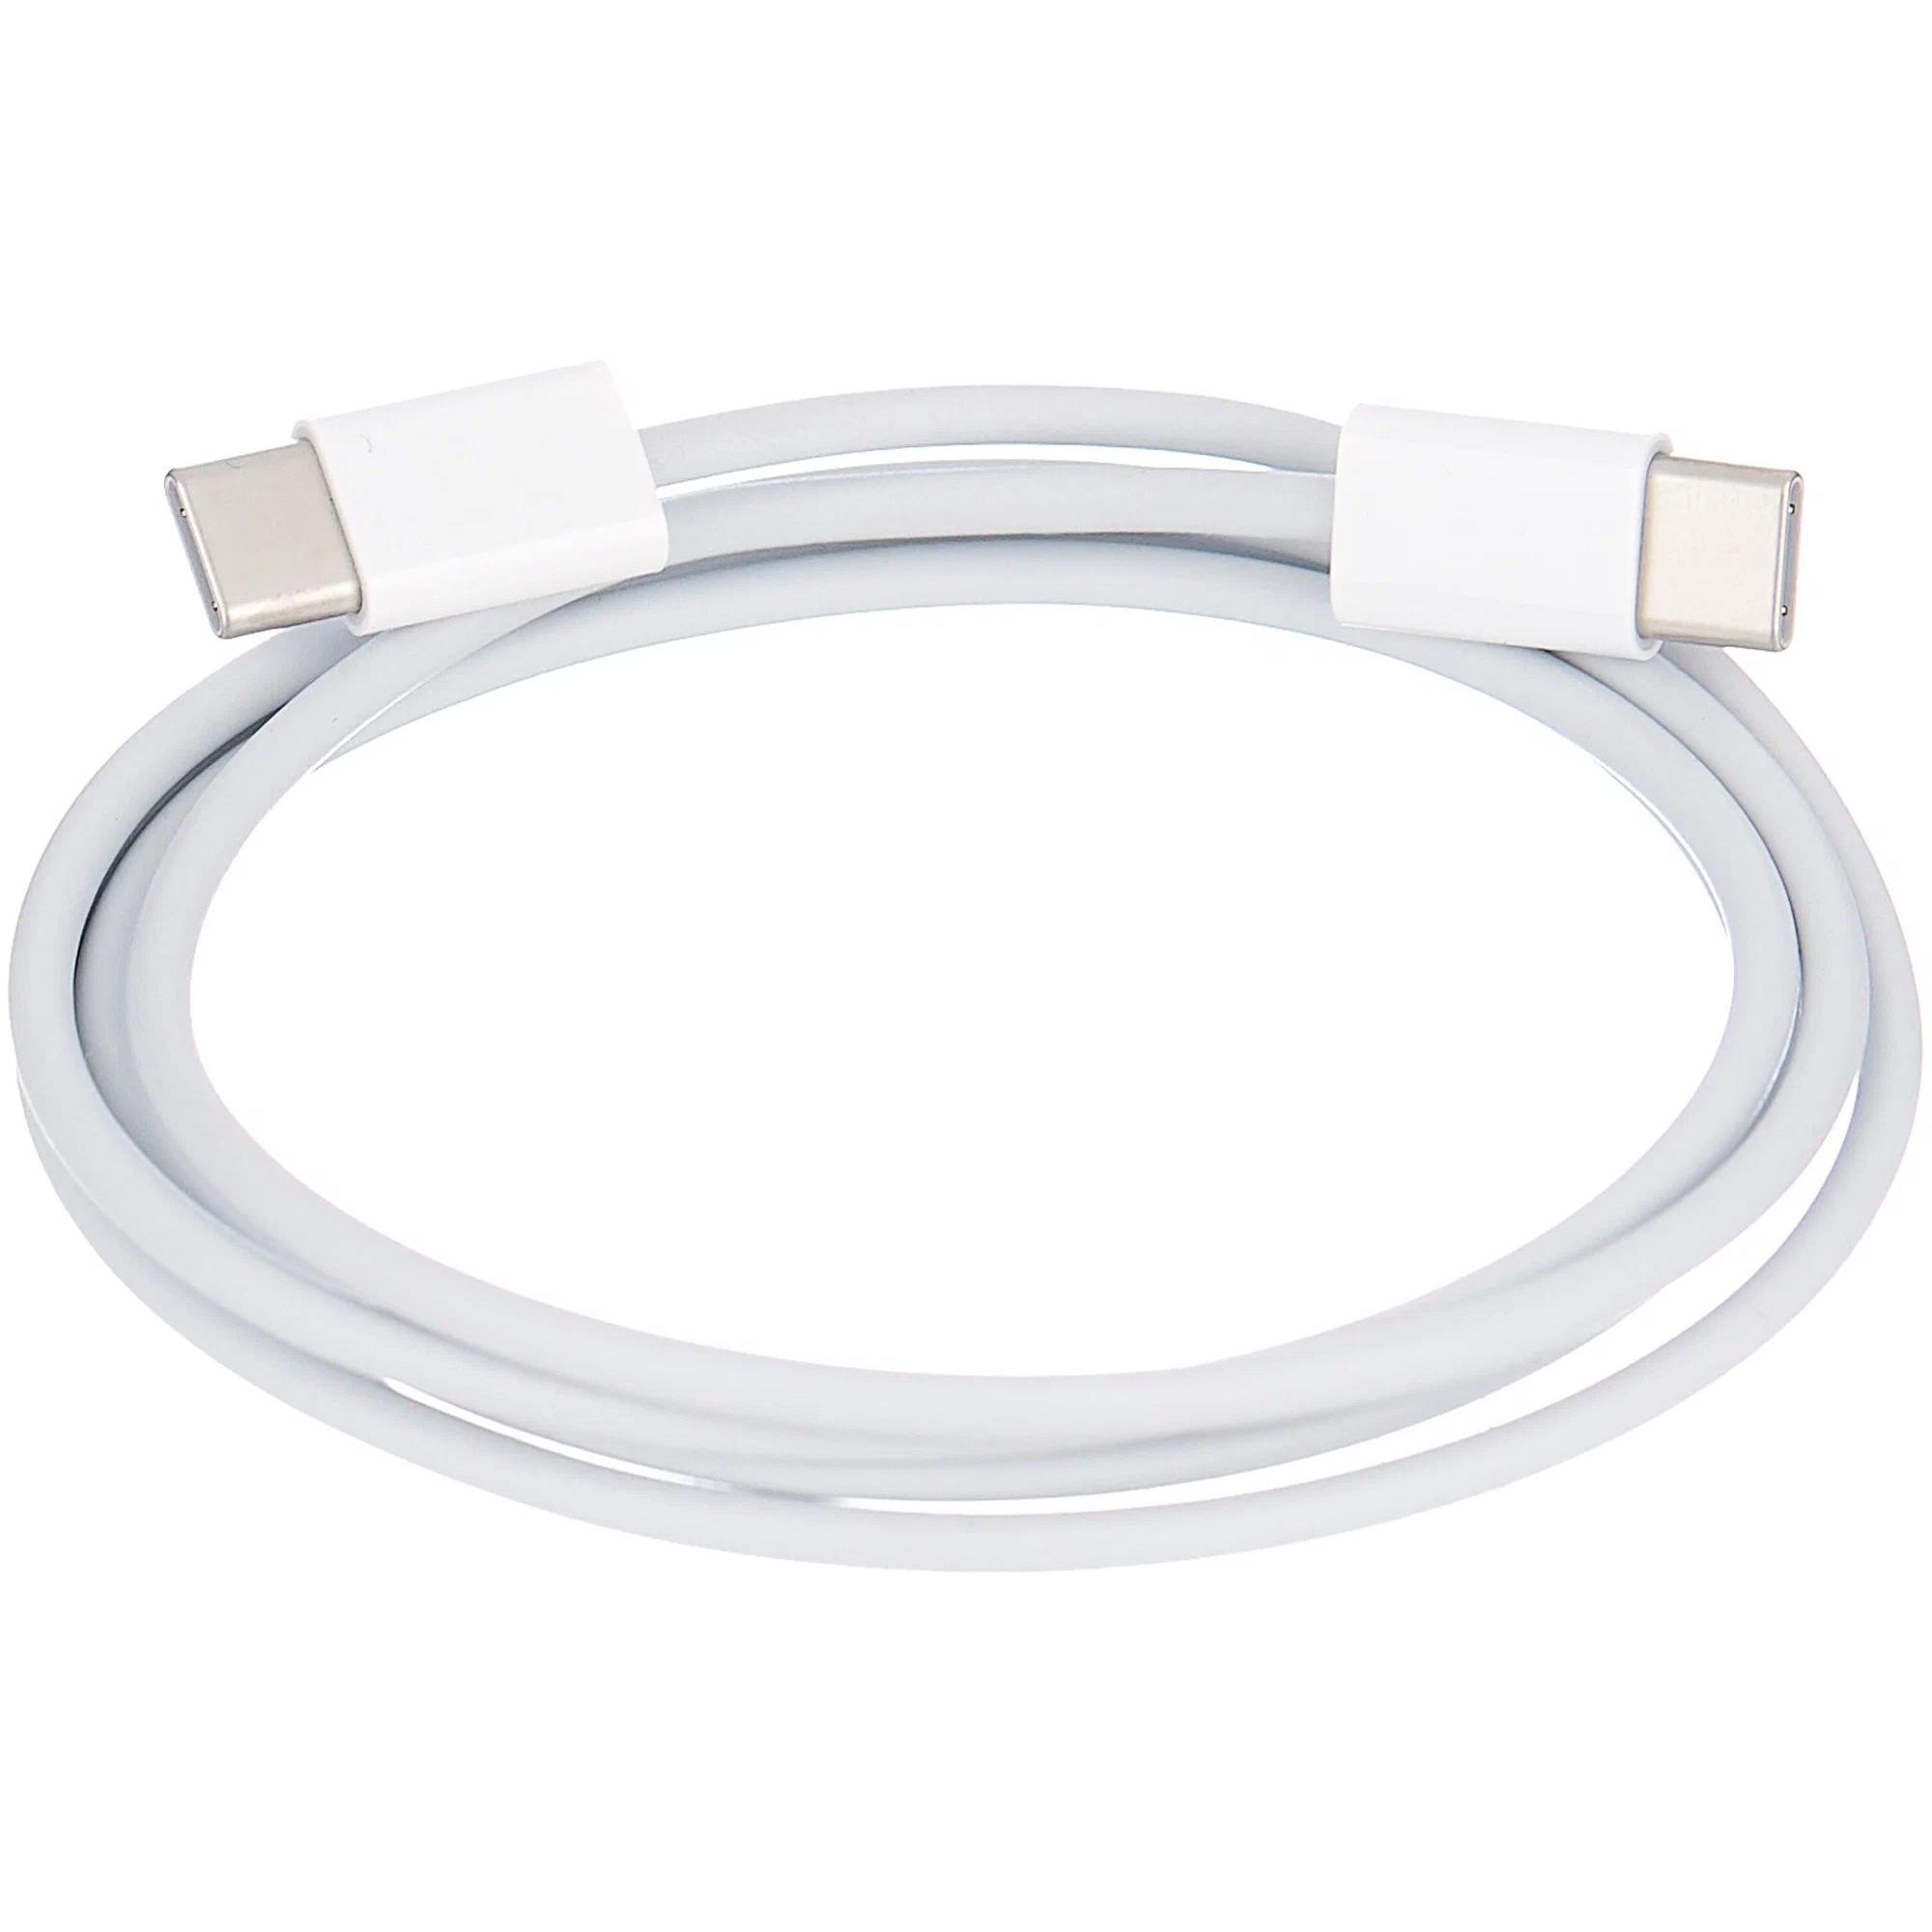 Кабель Apple USB-C Charge Cable (1m) MM093ZM/A, цвет белый